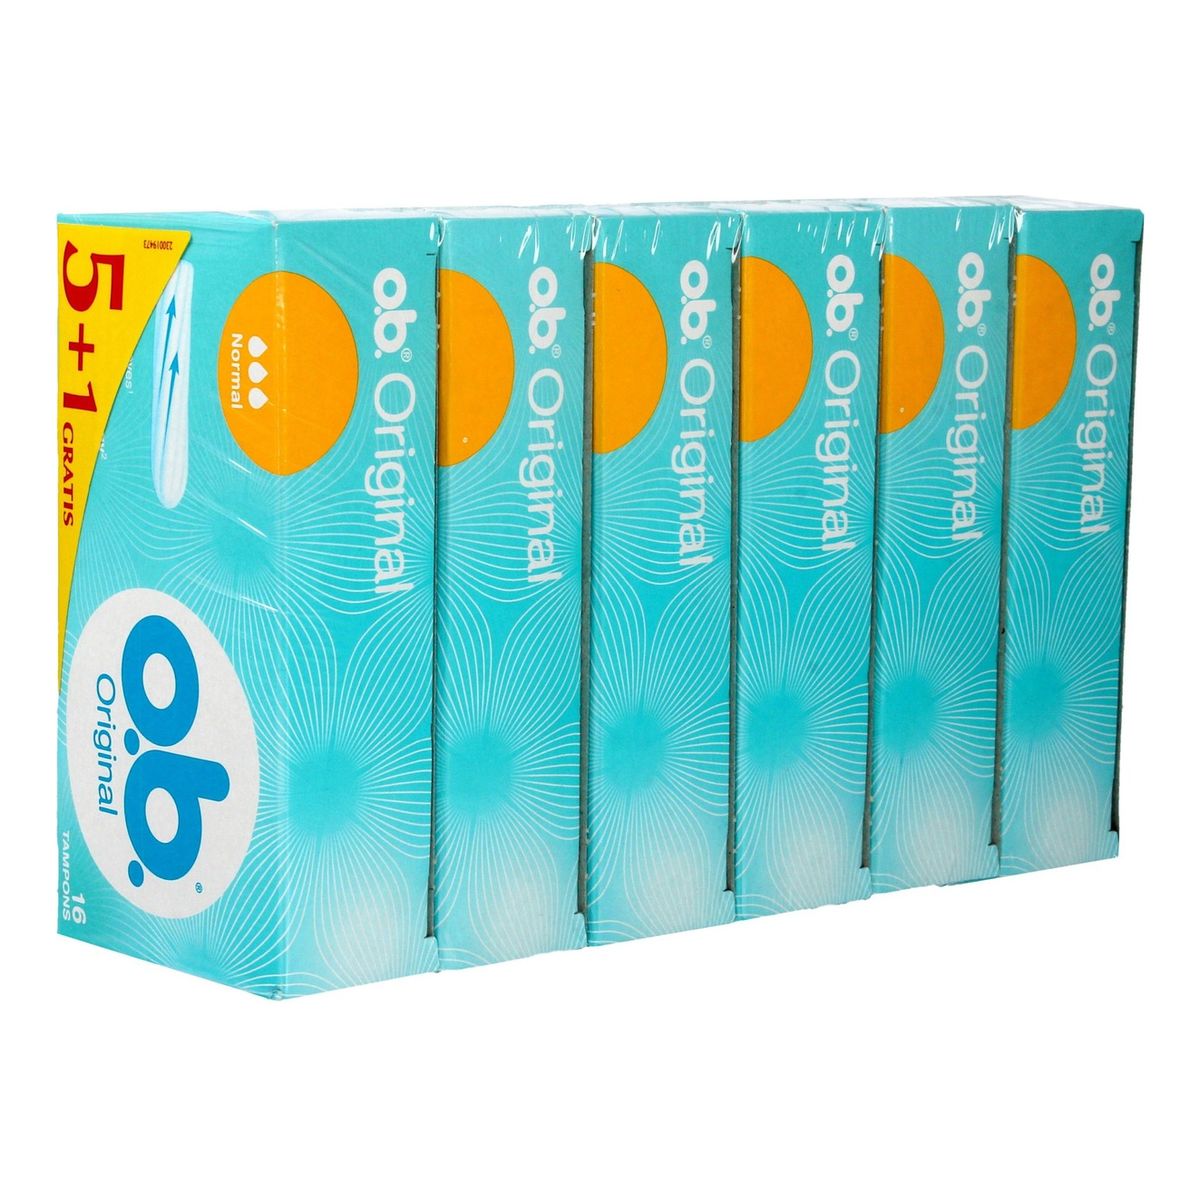 O.B. Original Normal tampony higieniczne 6x16 sztuk (5+1 gratis)